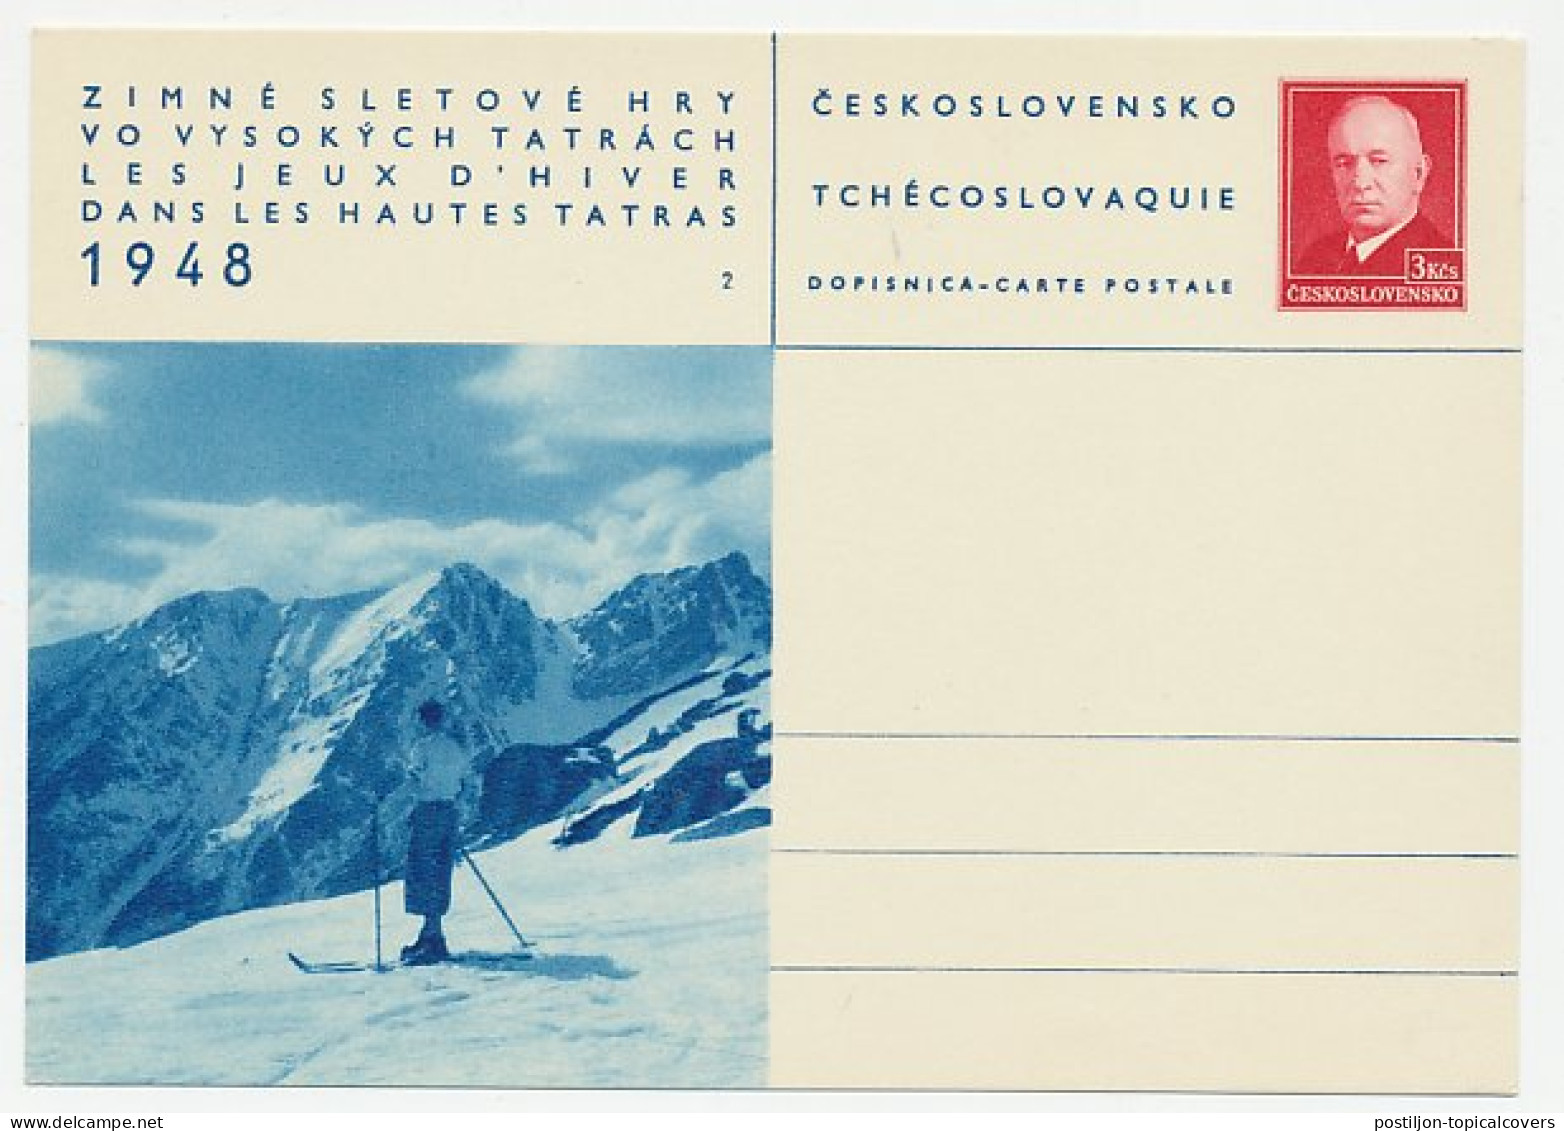 Postal Stationery Czechoslovakia 1948 Winter Games - Skiing - Winter (Varia)